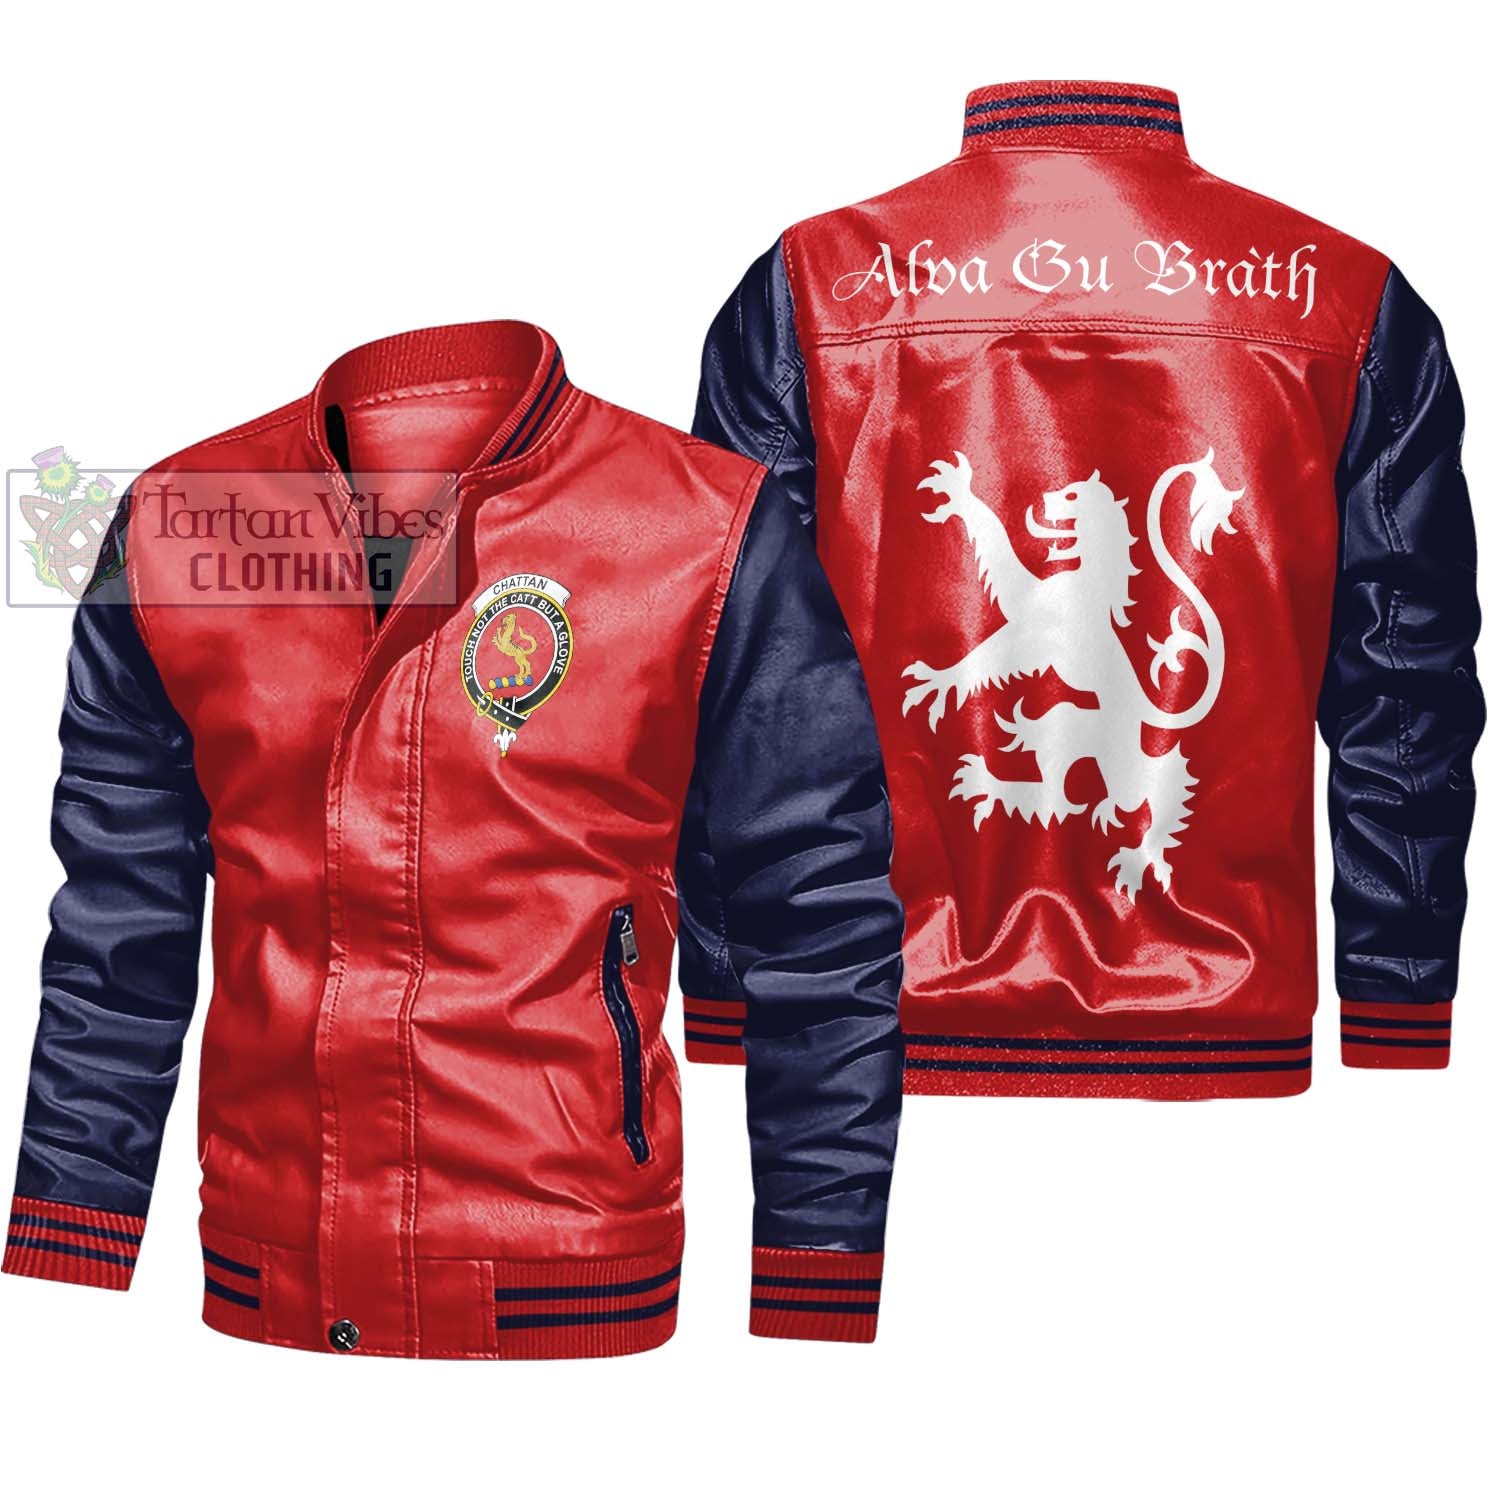 Tartan Vibes Clothing Chattan Family Crest Leather Bomber Jacket Lion Rampant Alba Gu Brath Style